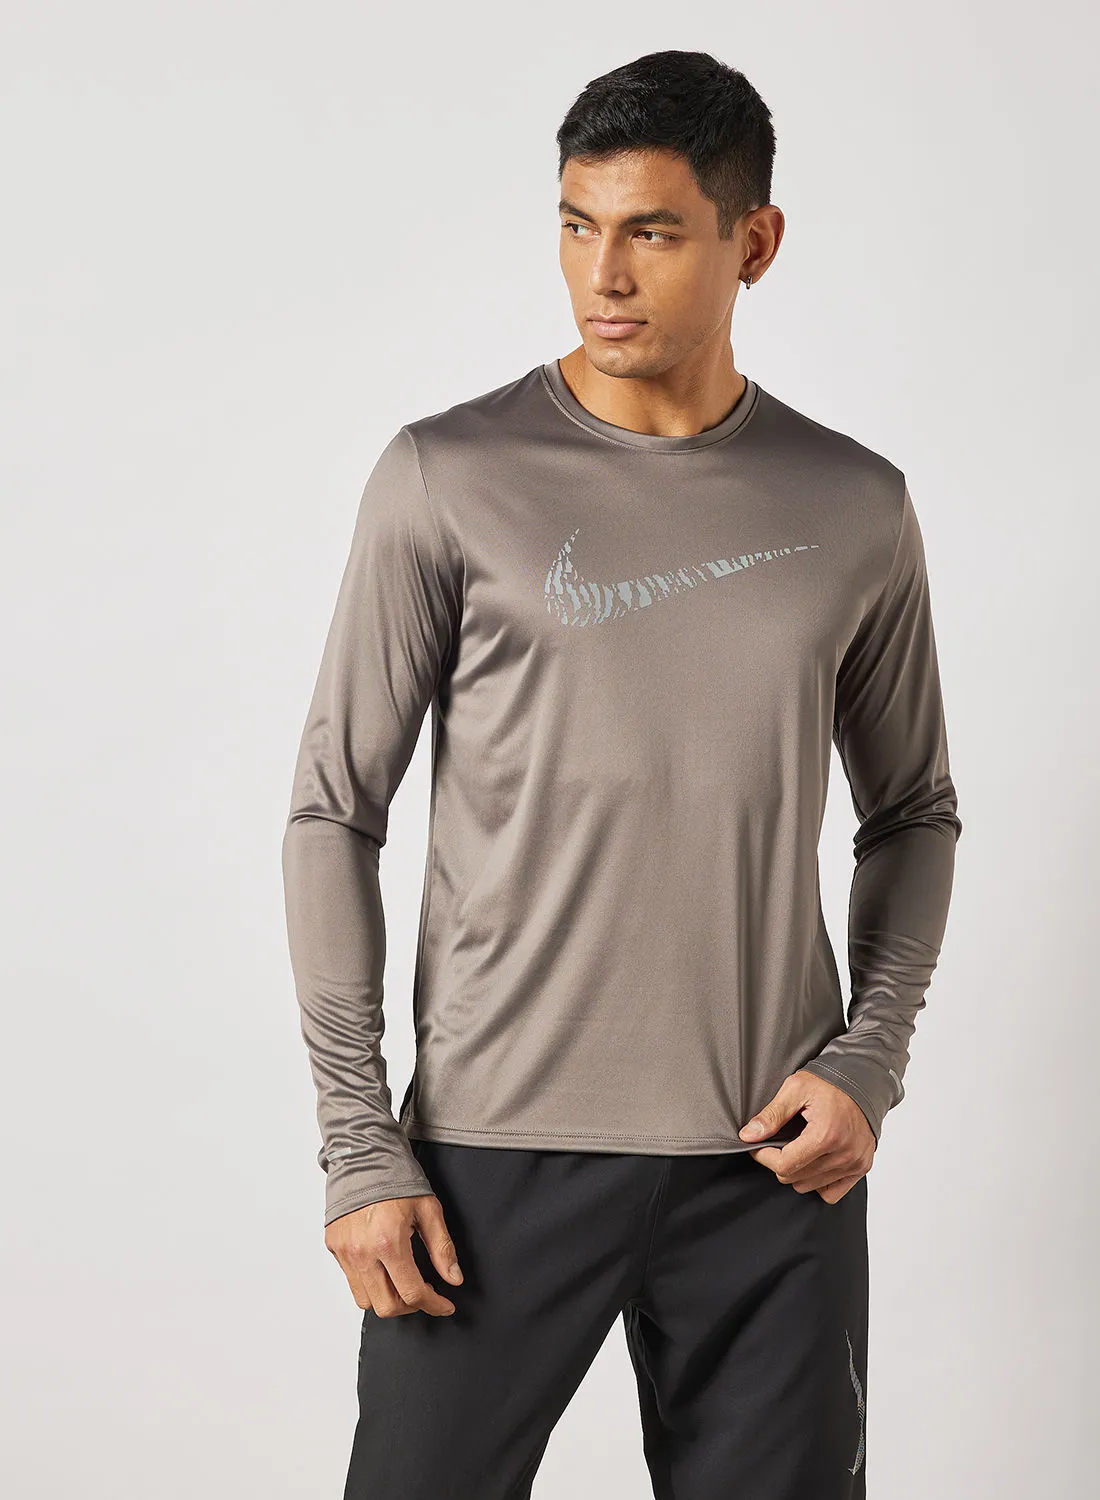 Nike Dri-FIT UV Run Division Miller T-Shirt